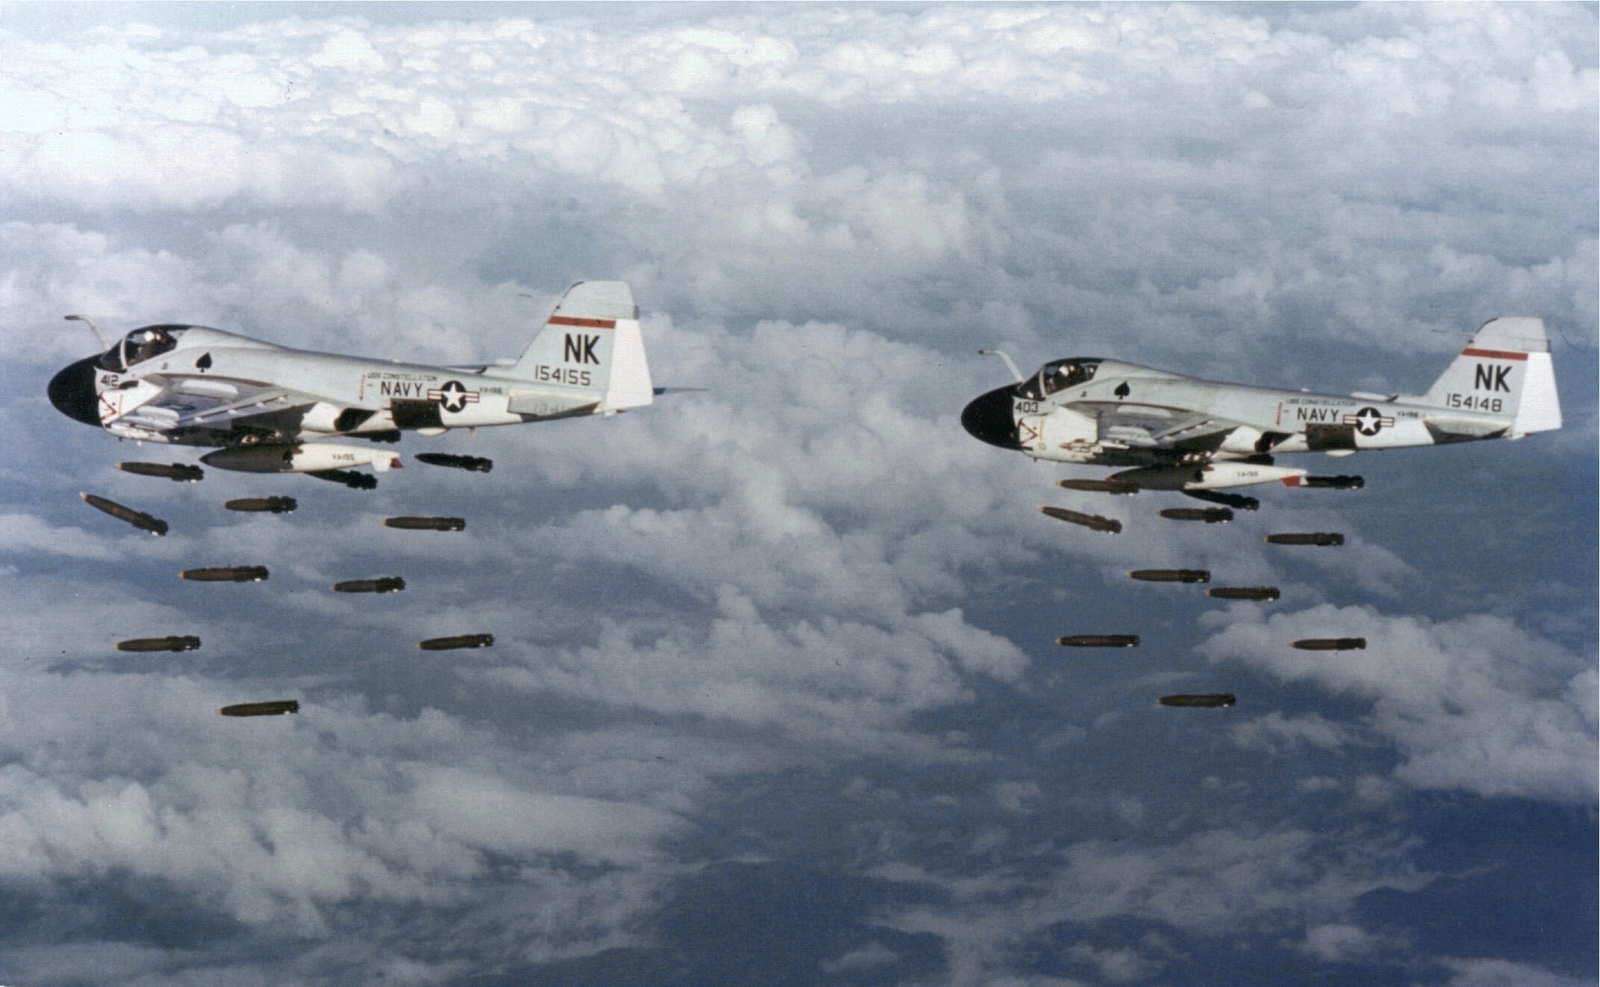 ers_of_VA-196_dropping_Mk_82_bombs_over_Vietnam_on_20_December_1968_%28NNAM.1996.253.7047.013%29.jpg